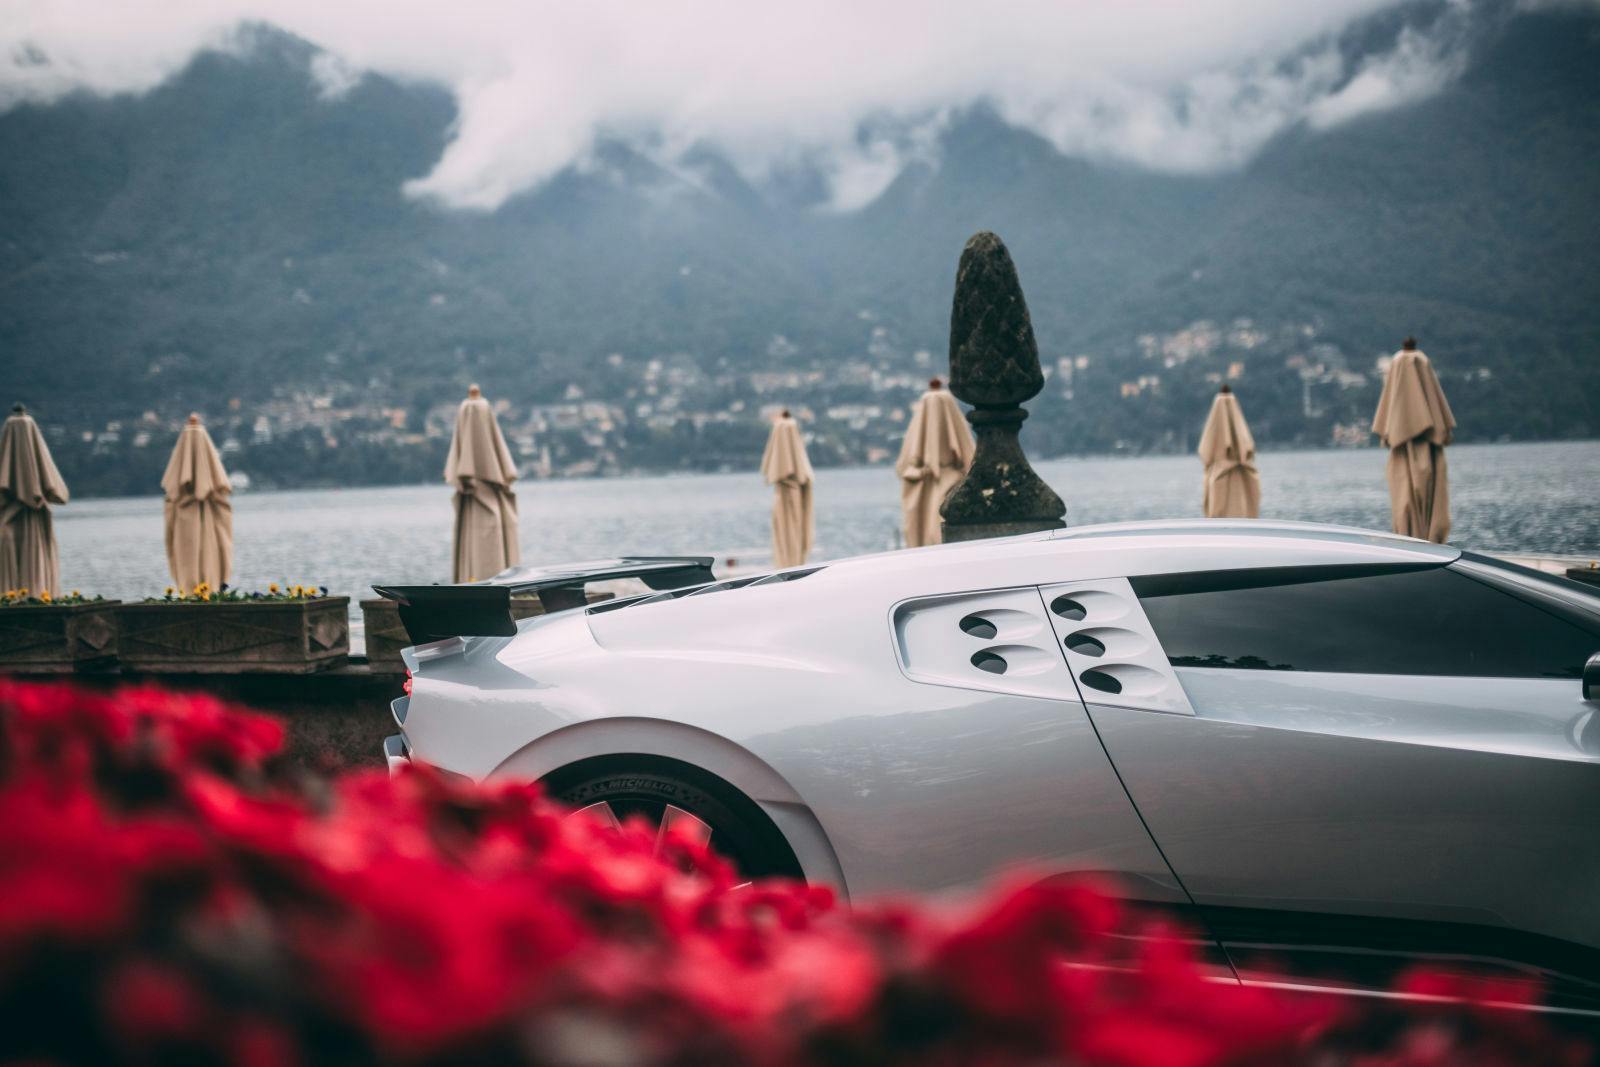 The Centodieci against the impressive backdrop of Lake Como.